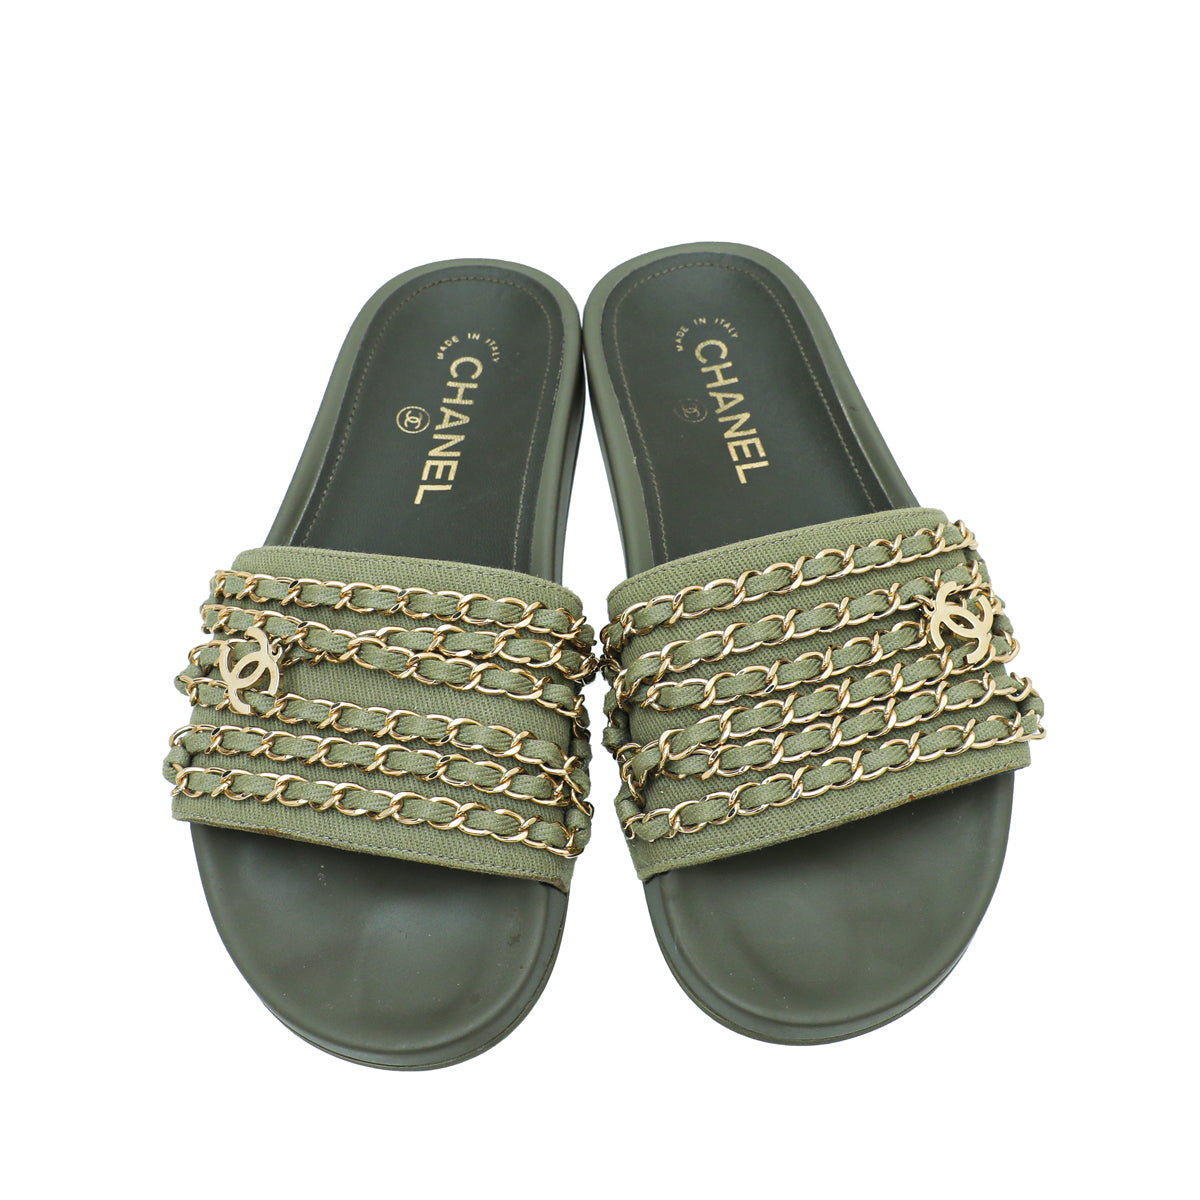 Chanel Slide Sandals Green and White Size 38 New in Box GA003  Julia  Rose Boston  Shop